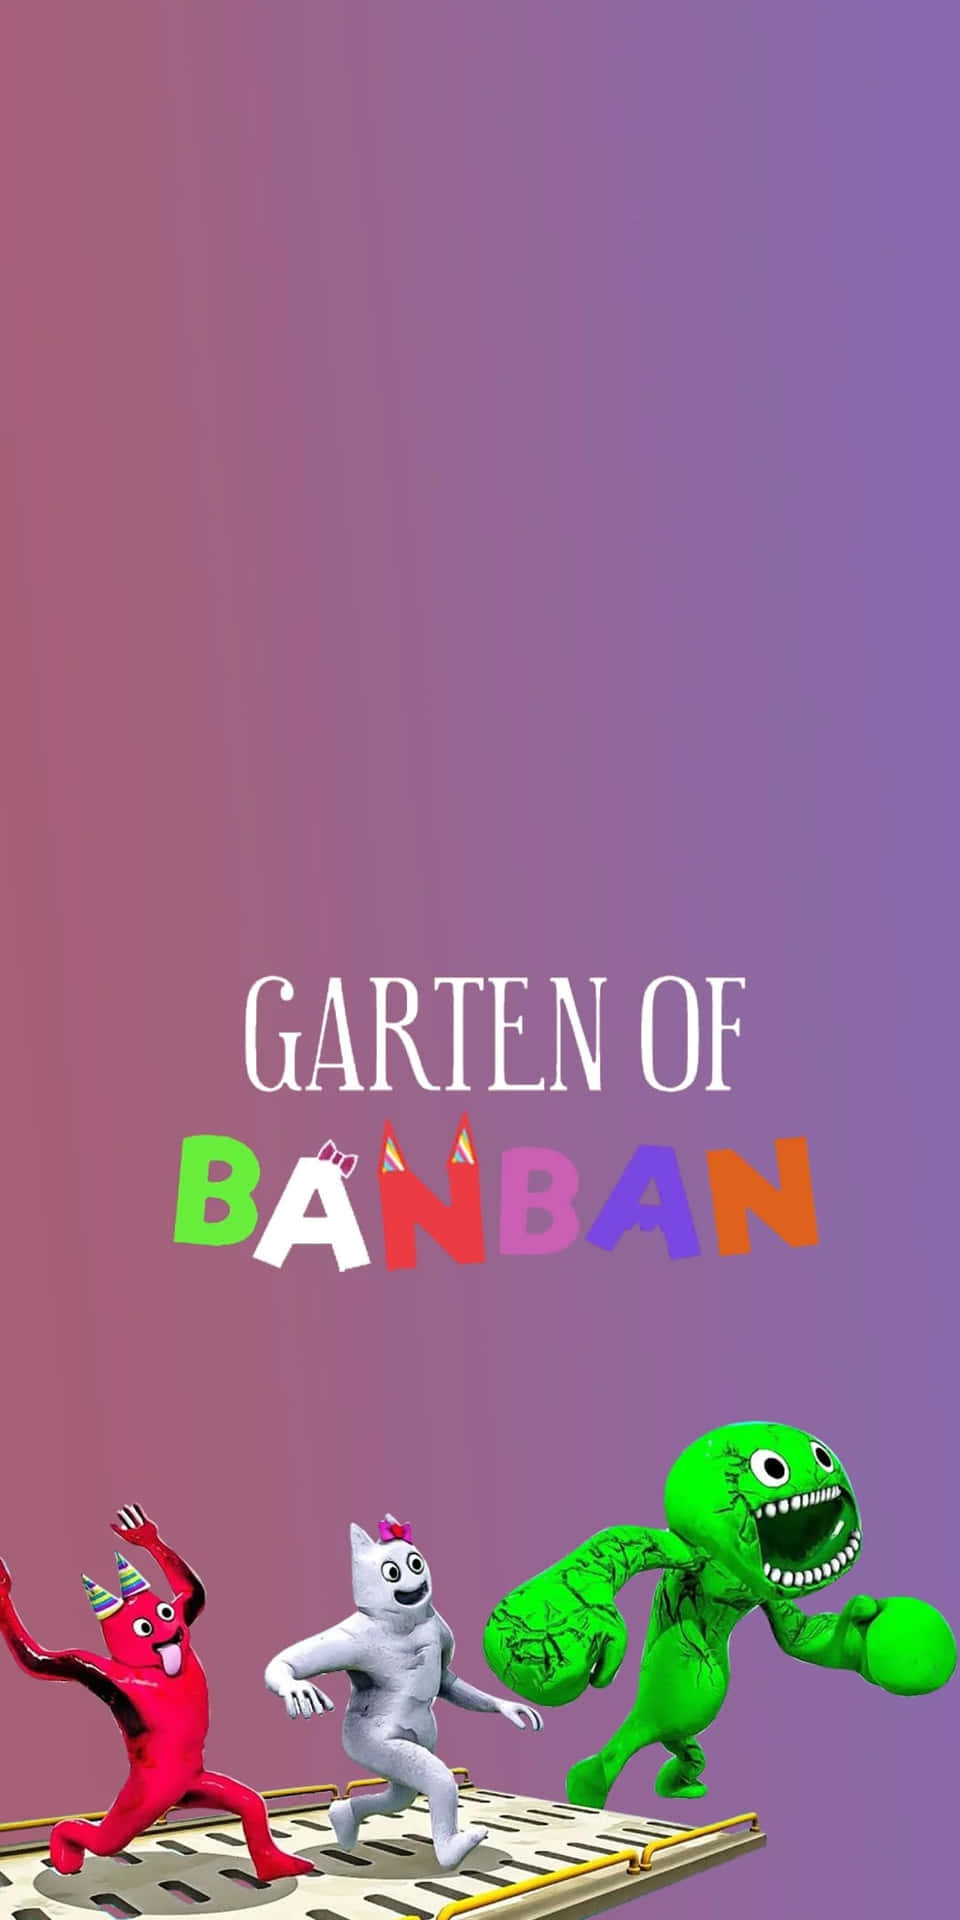 Gartenof Banban Animated Characters Wallpaper